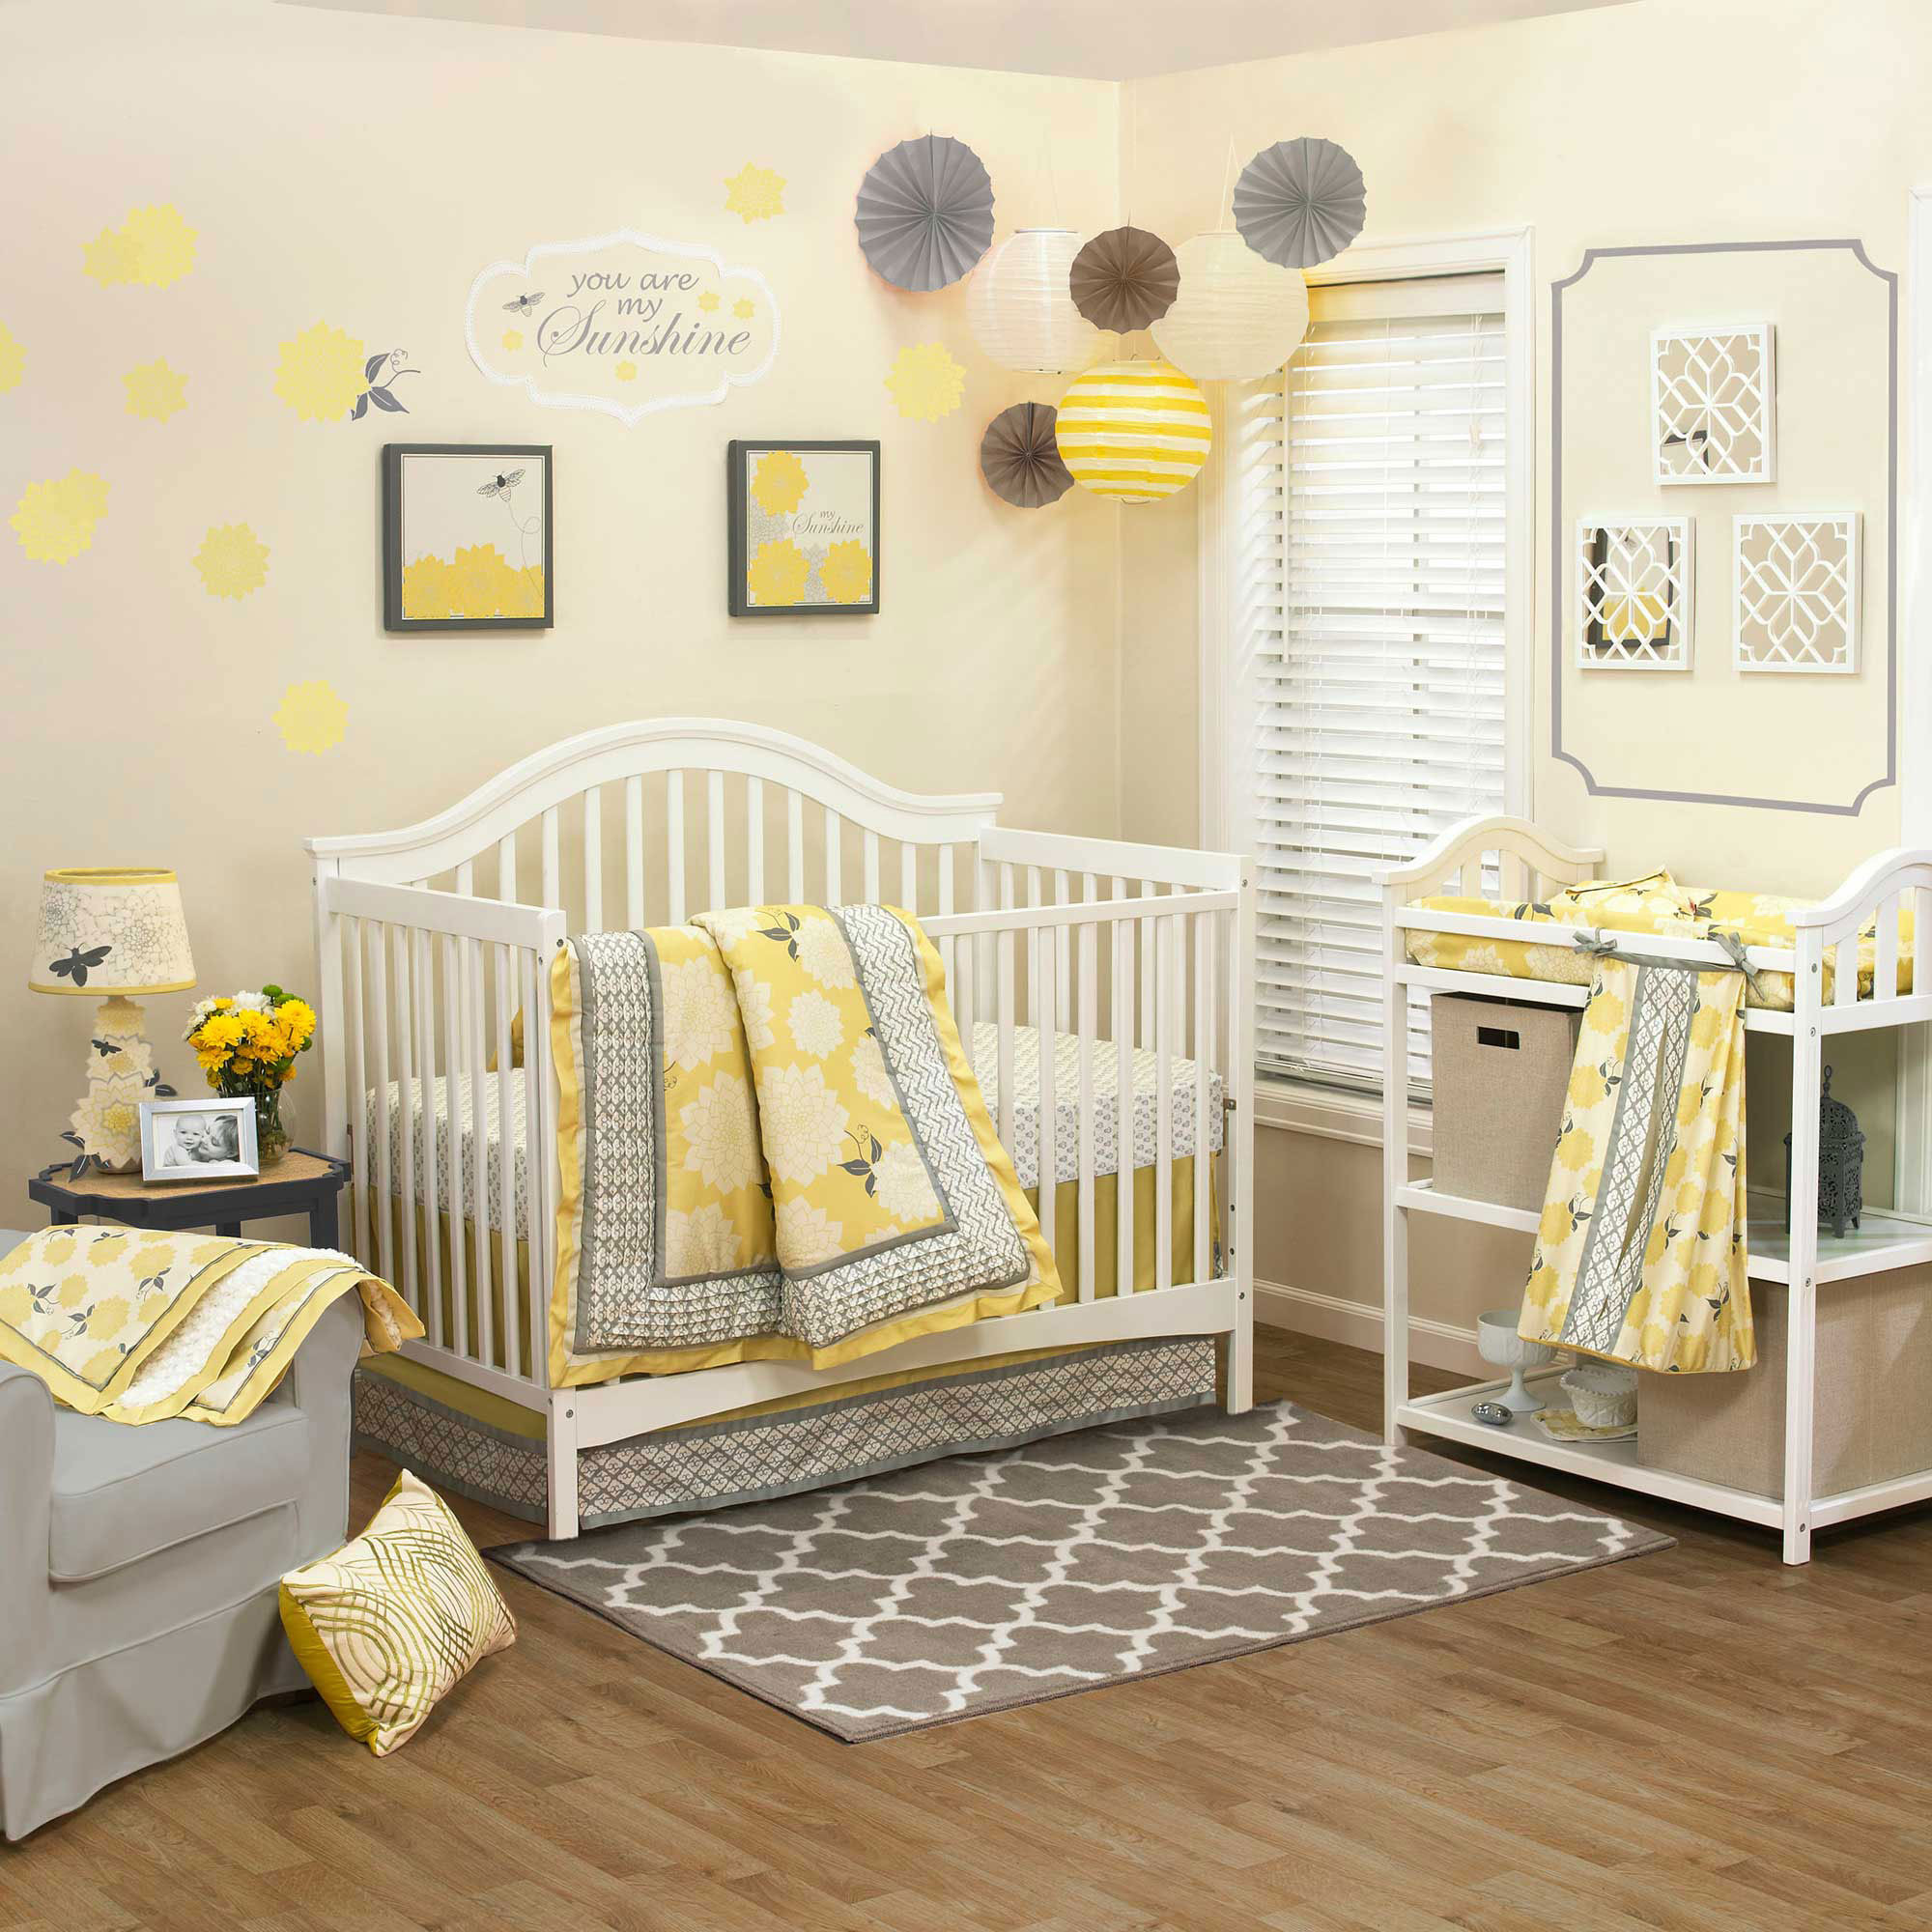 Baby Crib Decoration Ideas
 Baby Girl Nursery Ideas 10 Pretty Examples Decorating Room